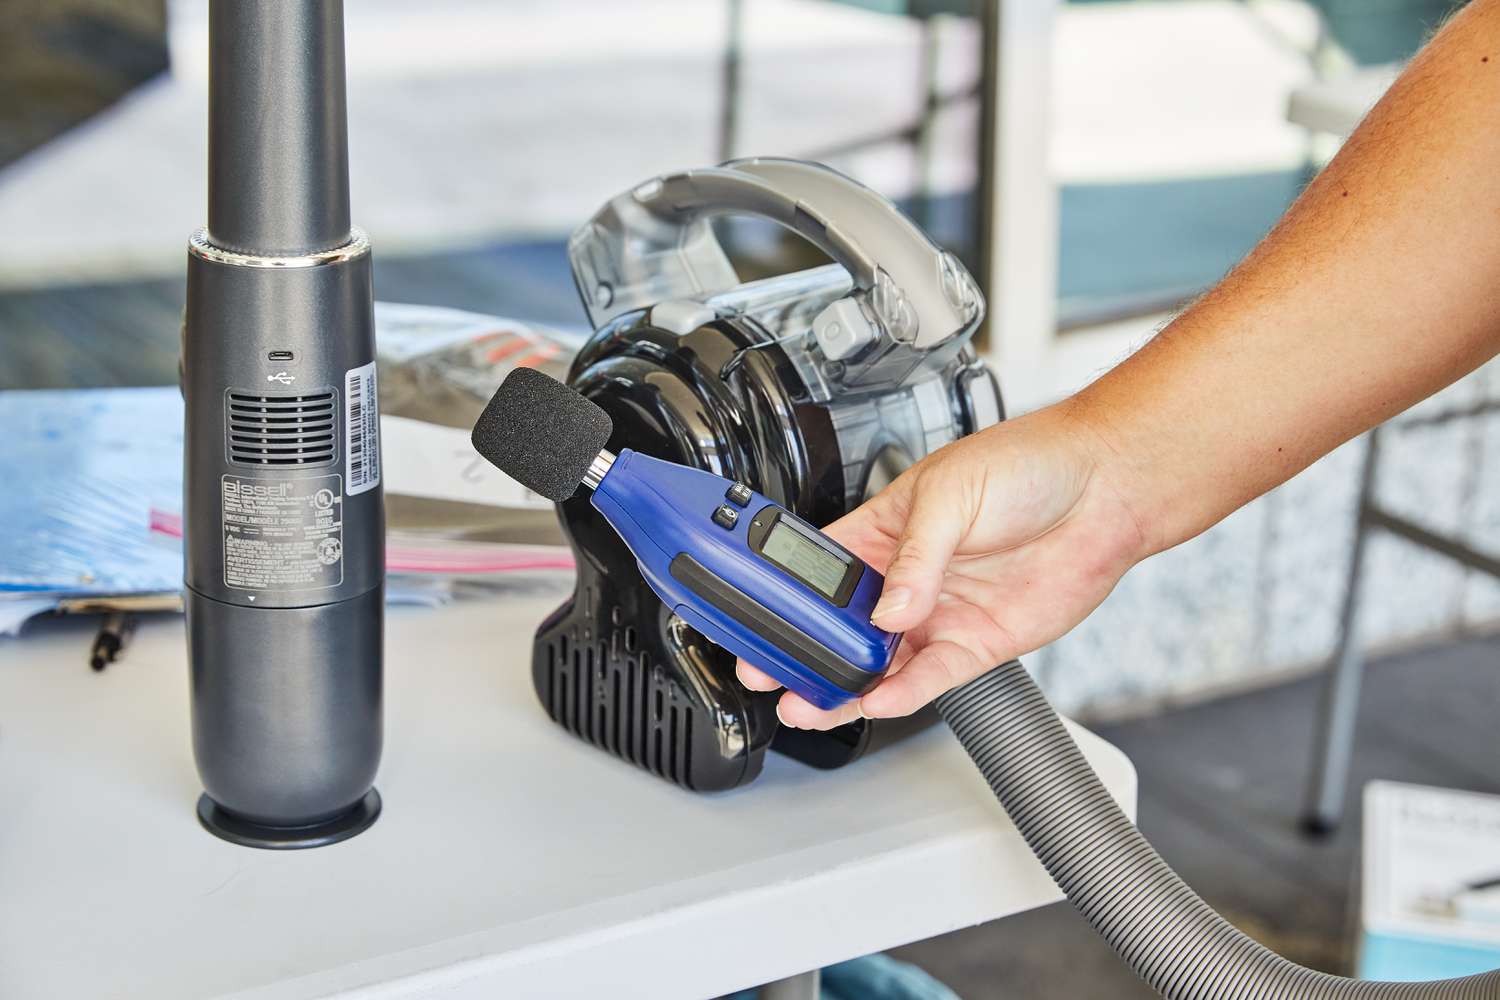 Hand holding a sound level meter next to the Black+Decker Flex Cordless Handheld Vacuum